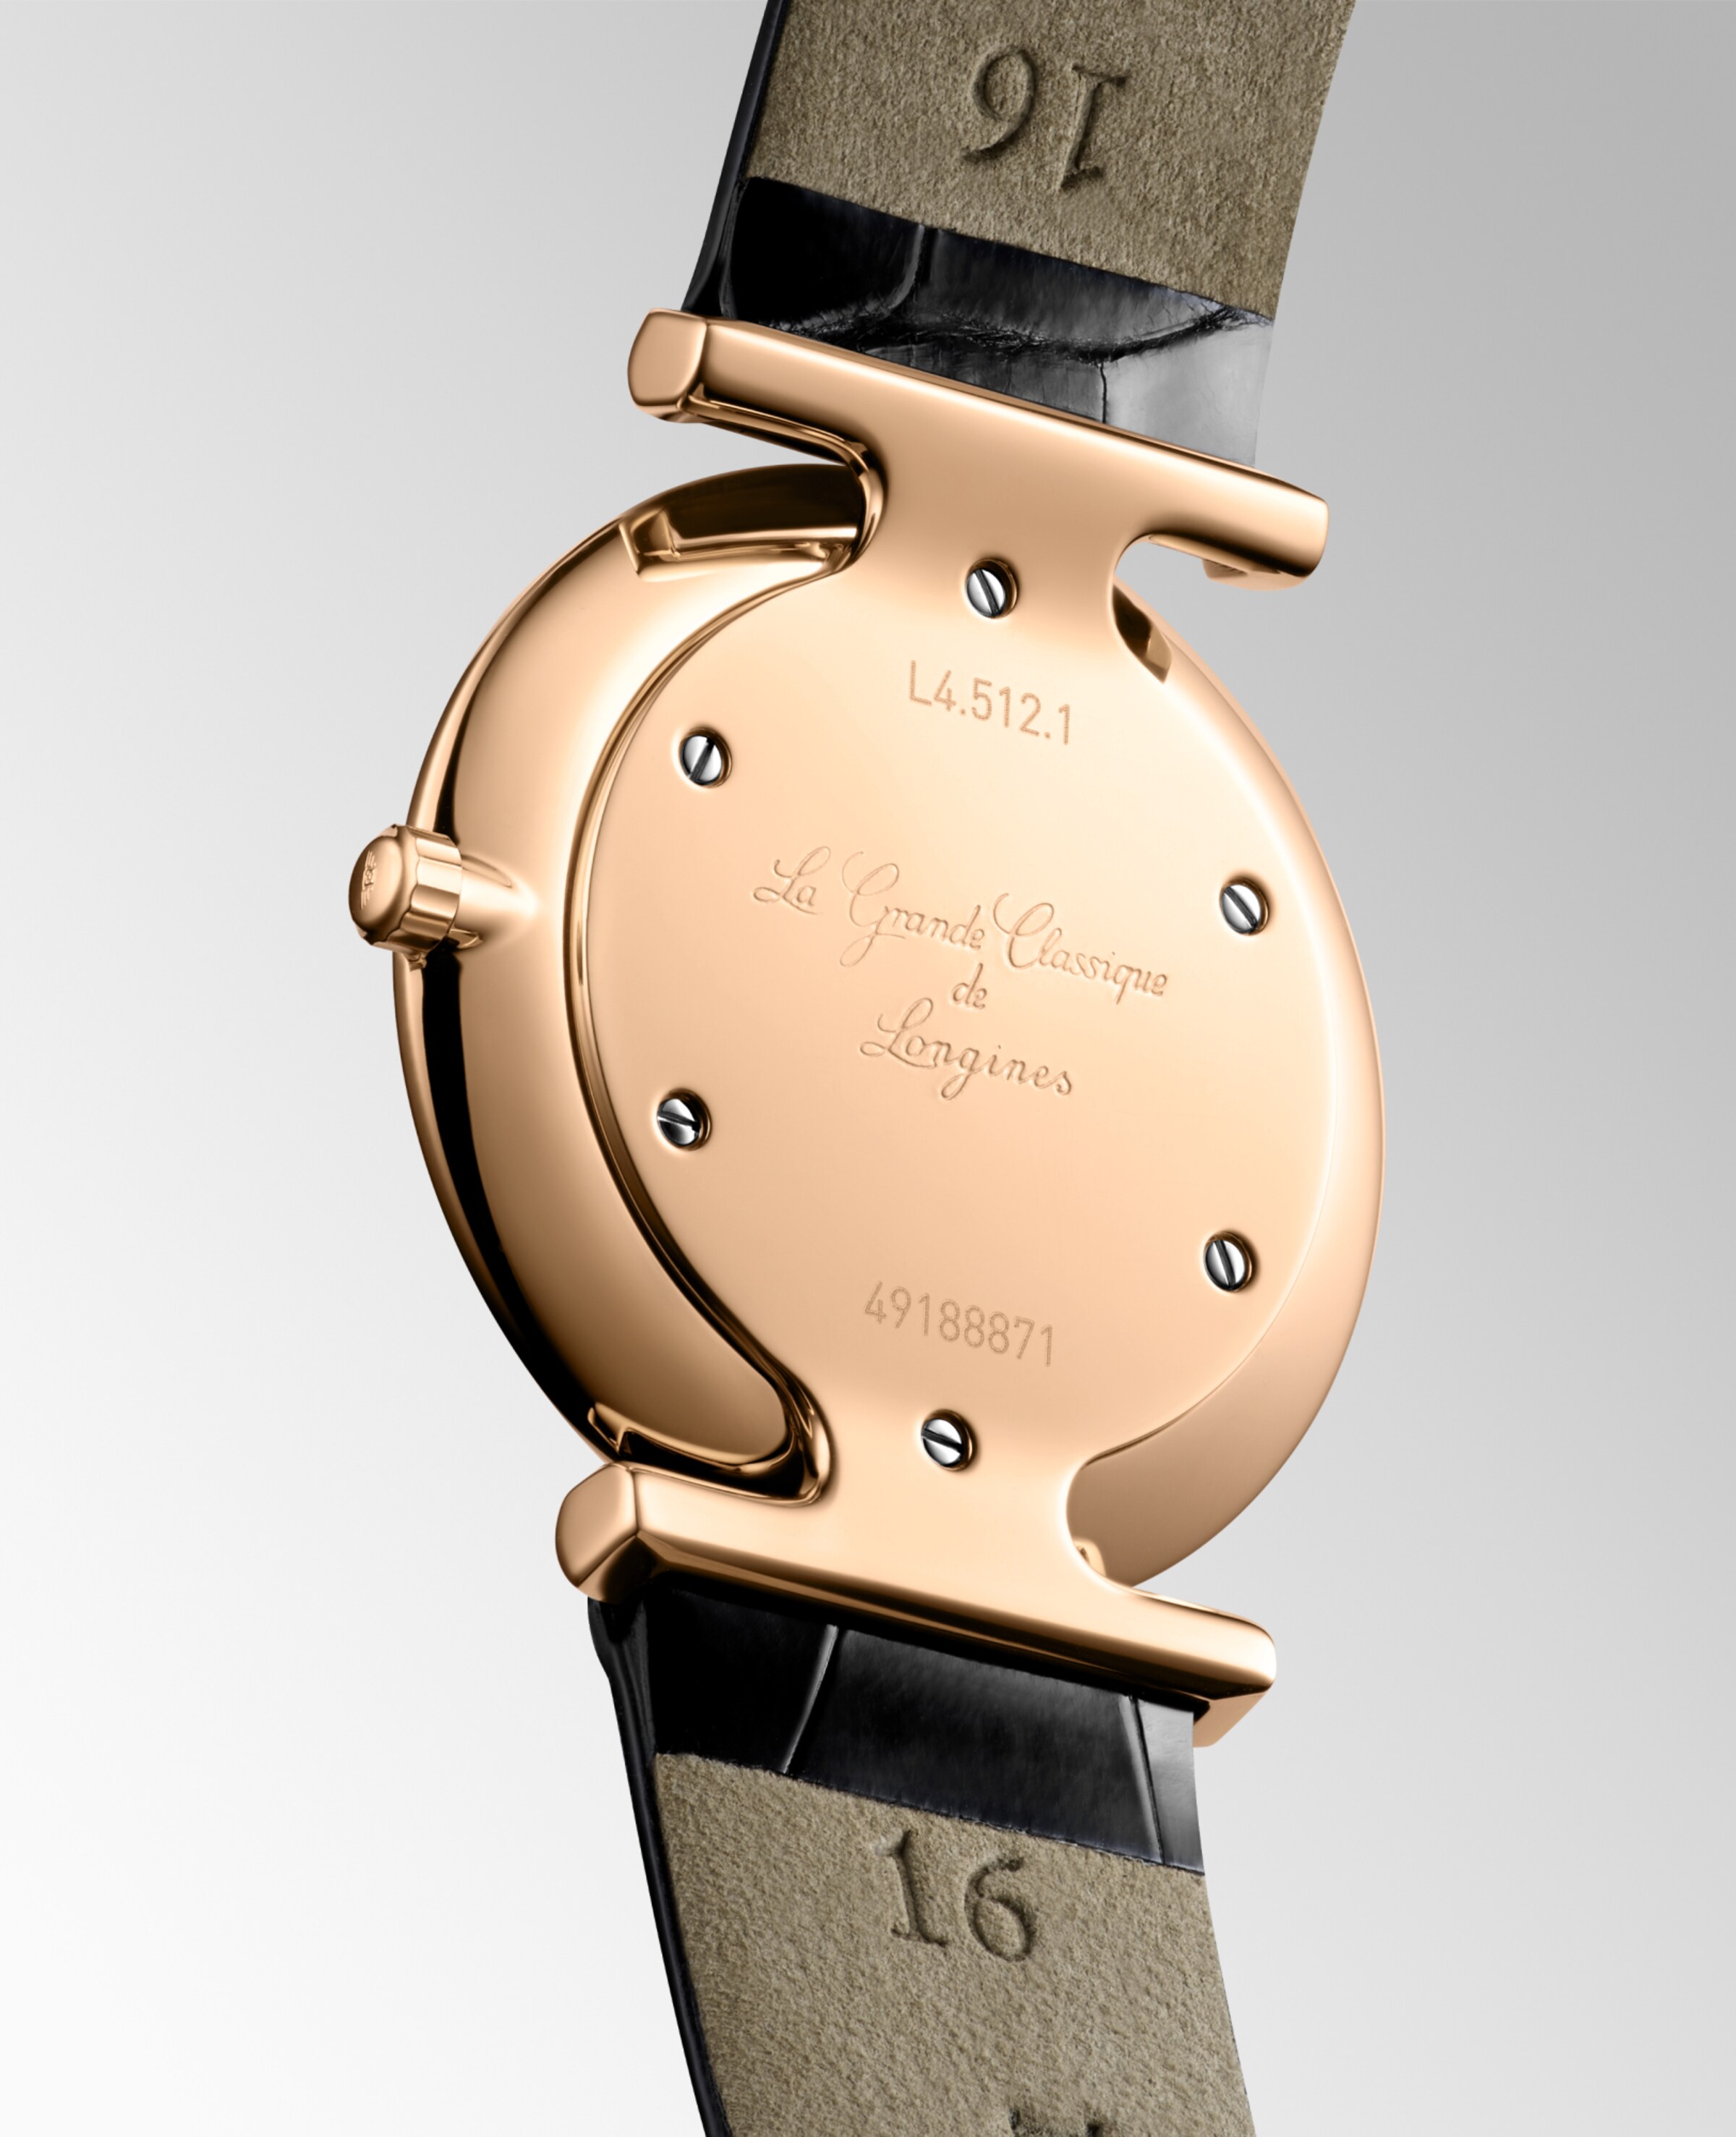 Longines LA GRANDE CLASSIQUE DE LONGINES Quartz Red PVD coating Watch - L4.512.1.57.7